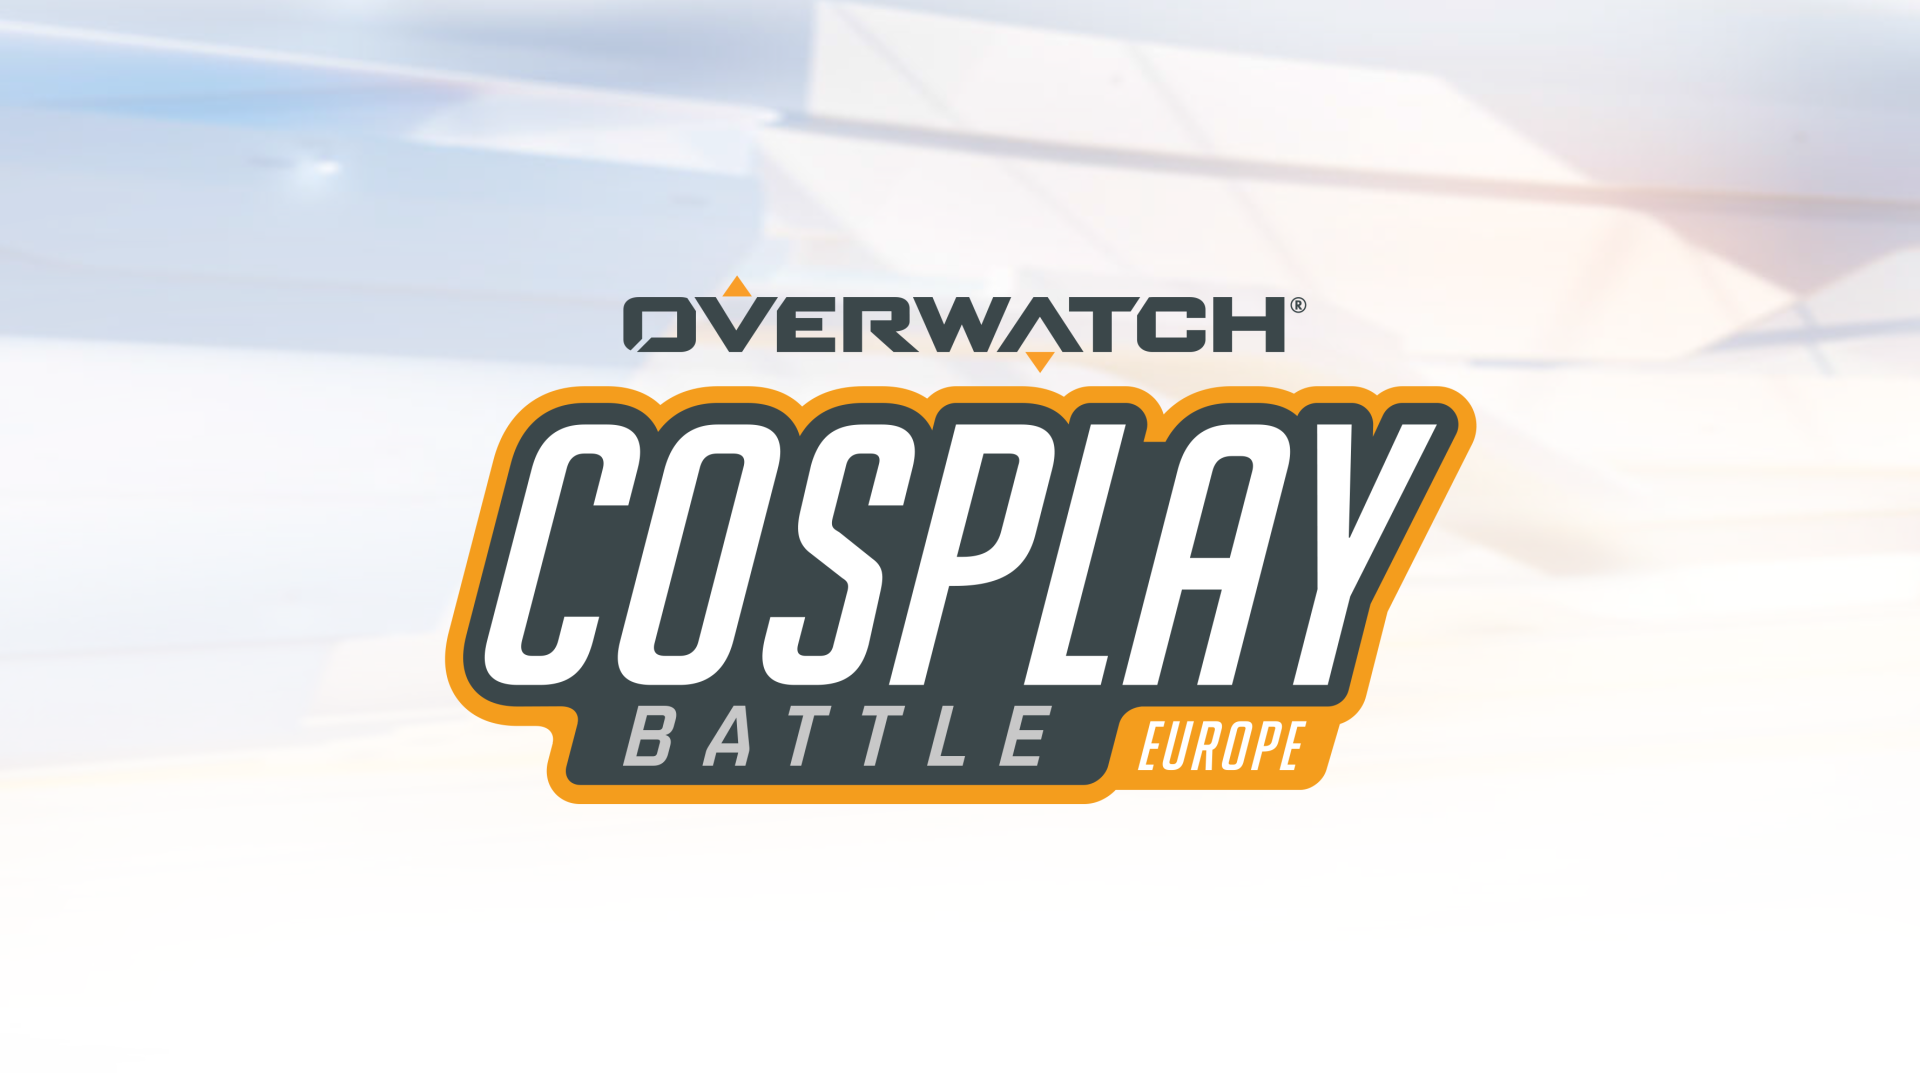 Overwatch Cosplay Battle!